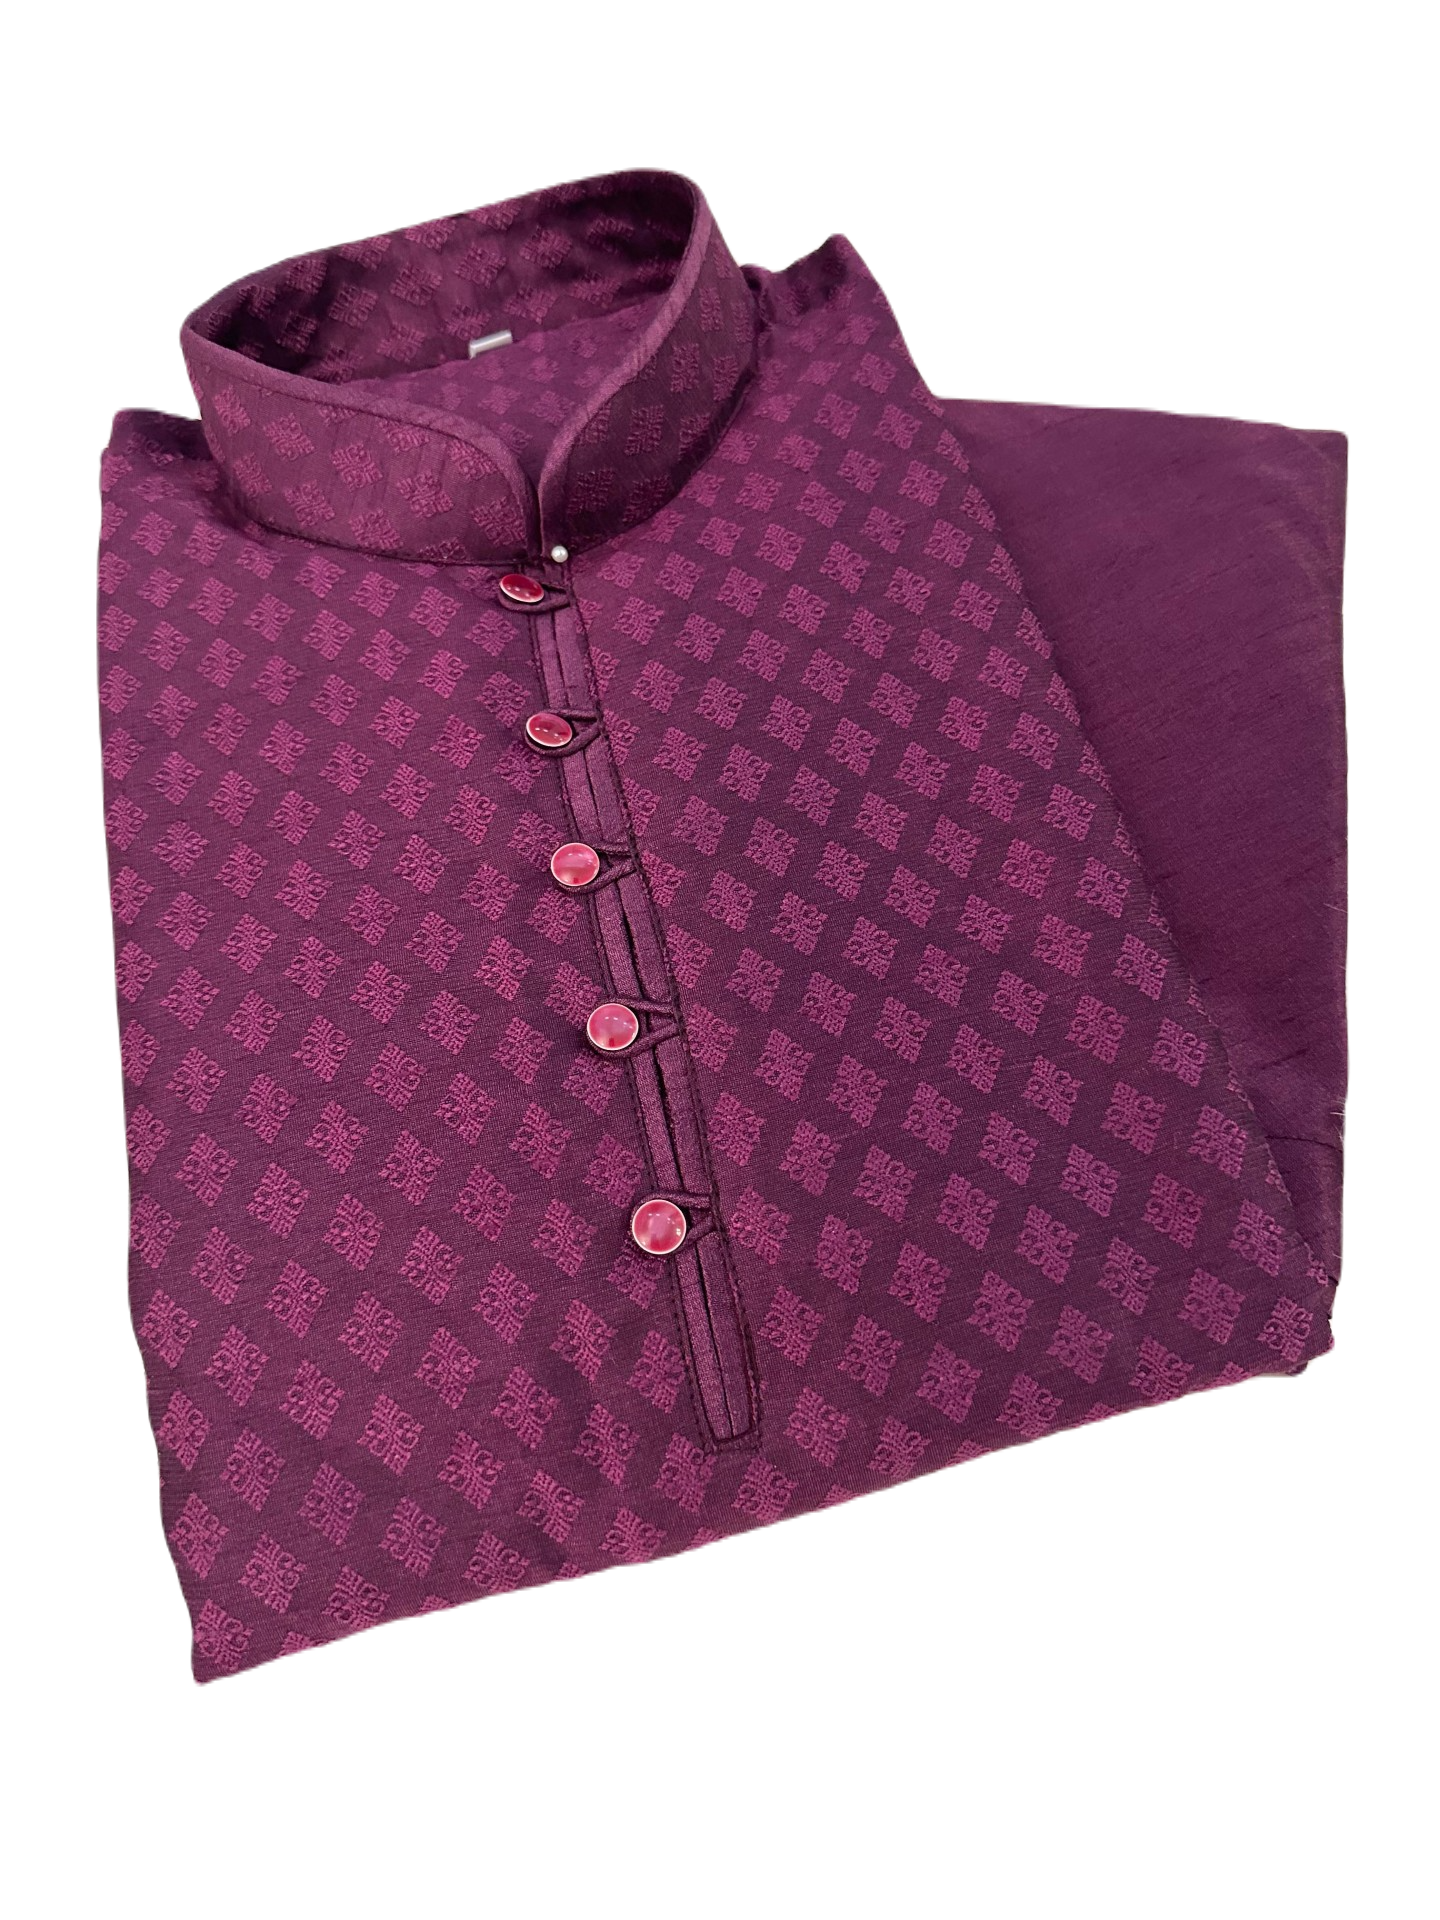 Man's Sangria Violet Shade Jacquard Silk 2 Piece Kurta Pajama Set, Father & Son's Outfit, DM -1061